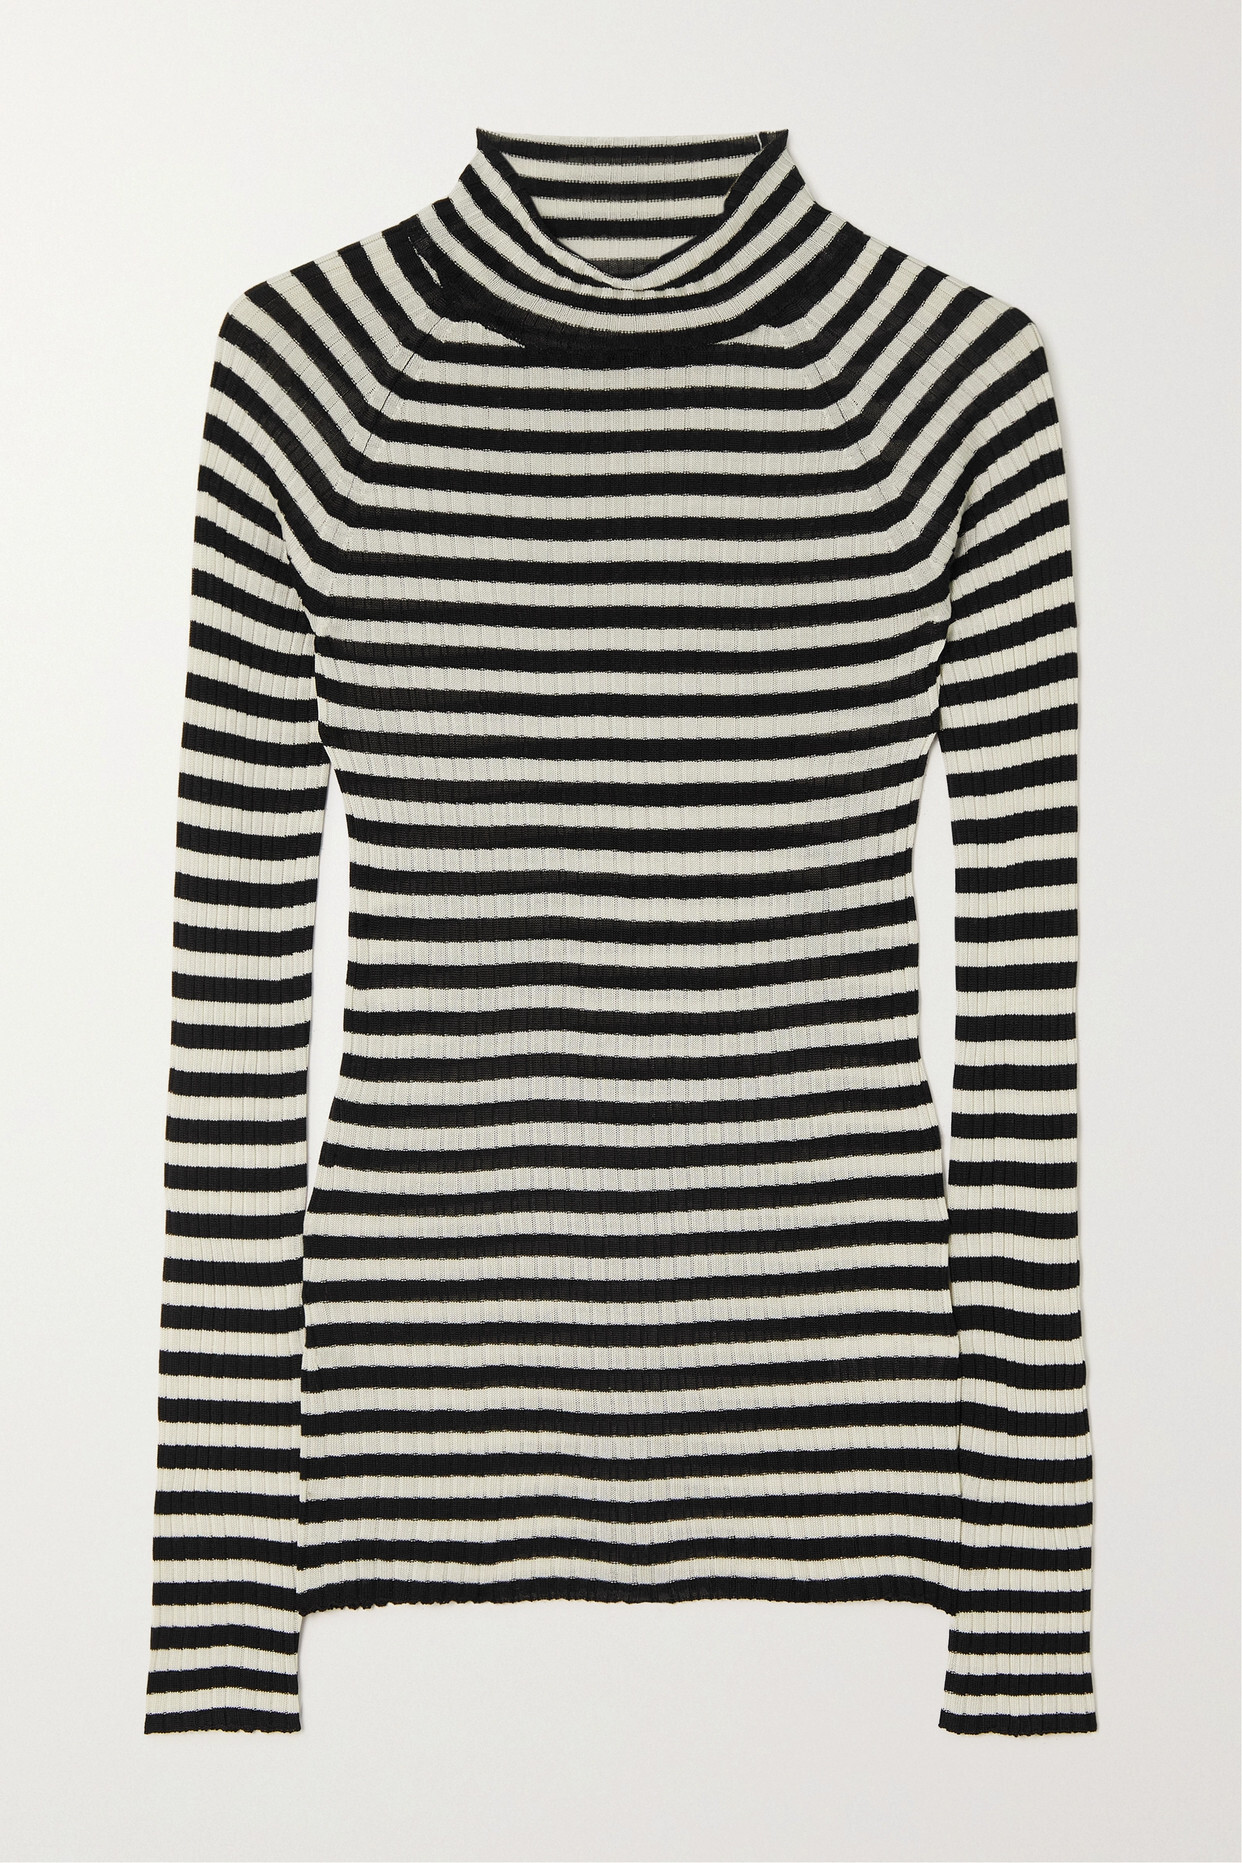 Khaite - Kita Striped Ribbed Silk Turtleneck Sweater - Black